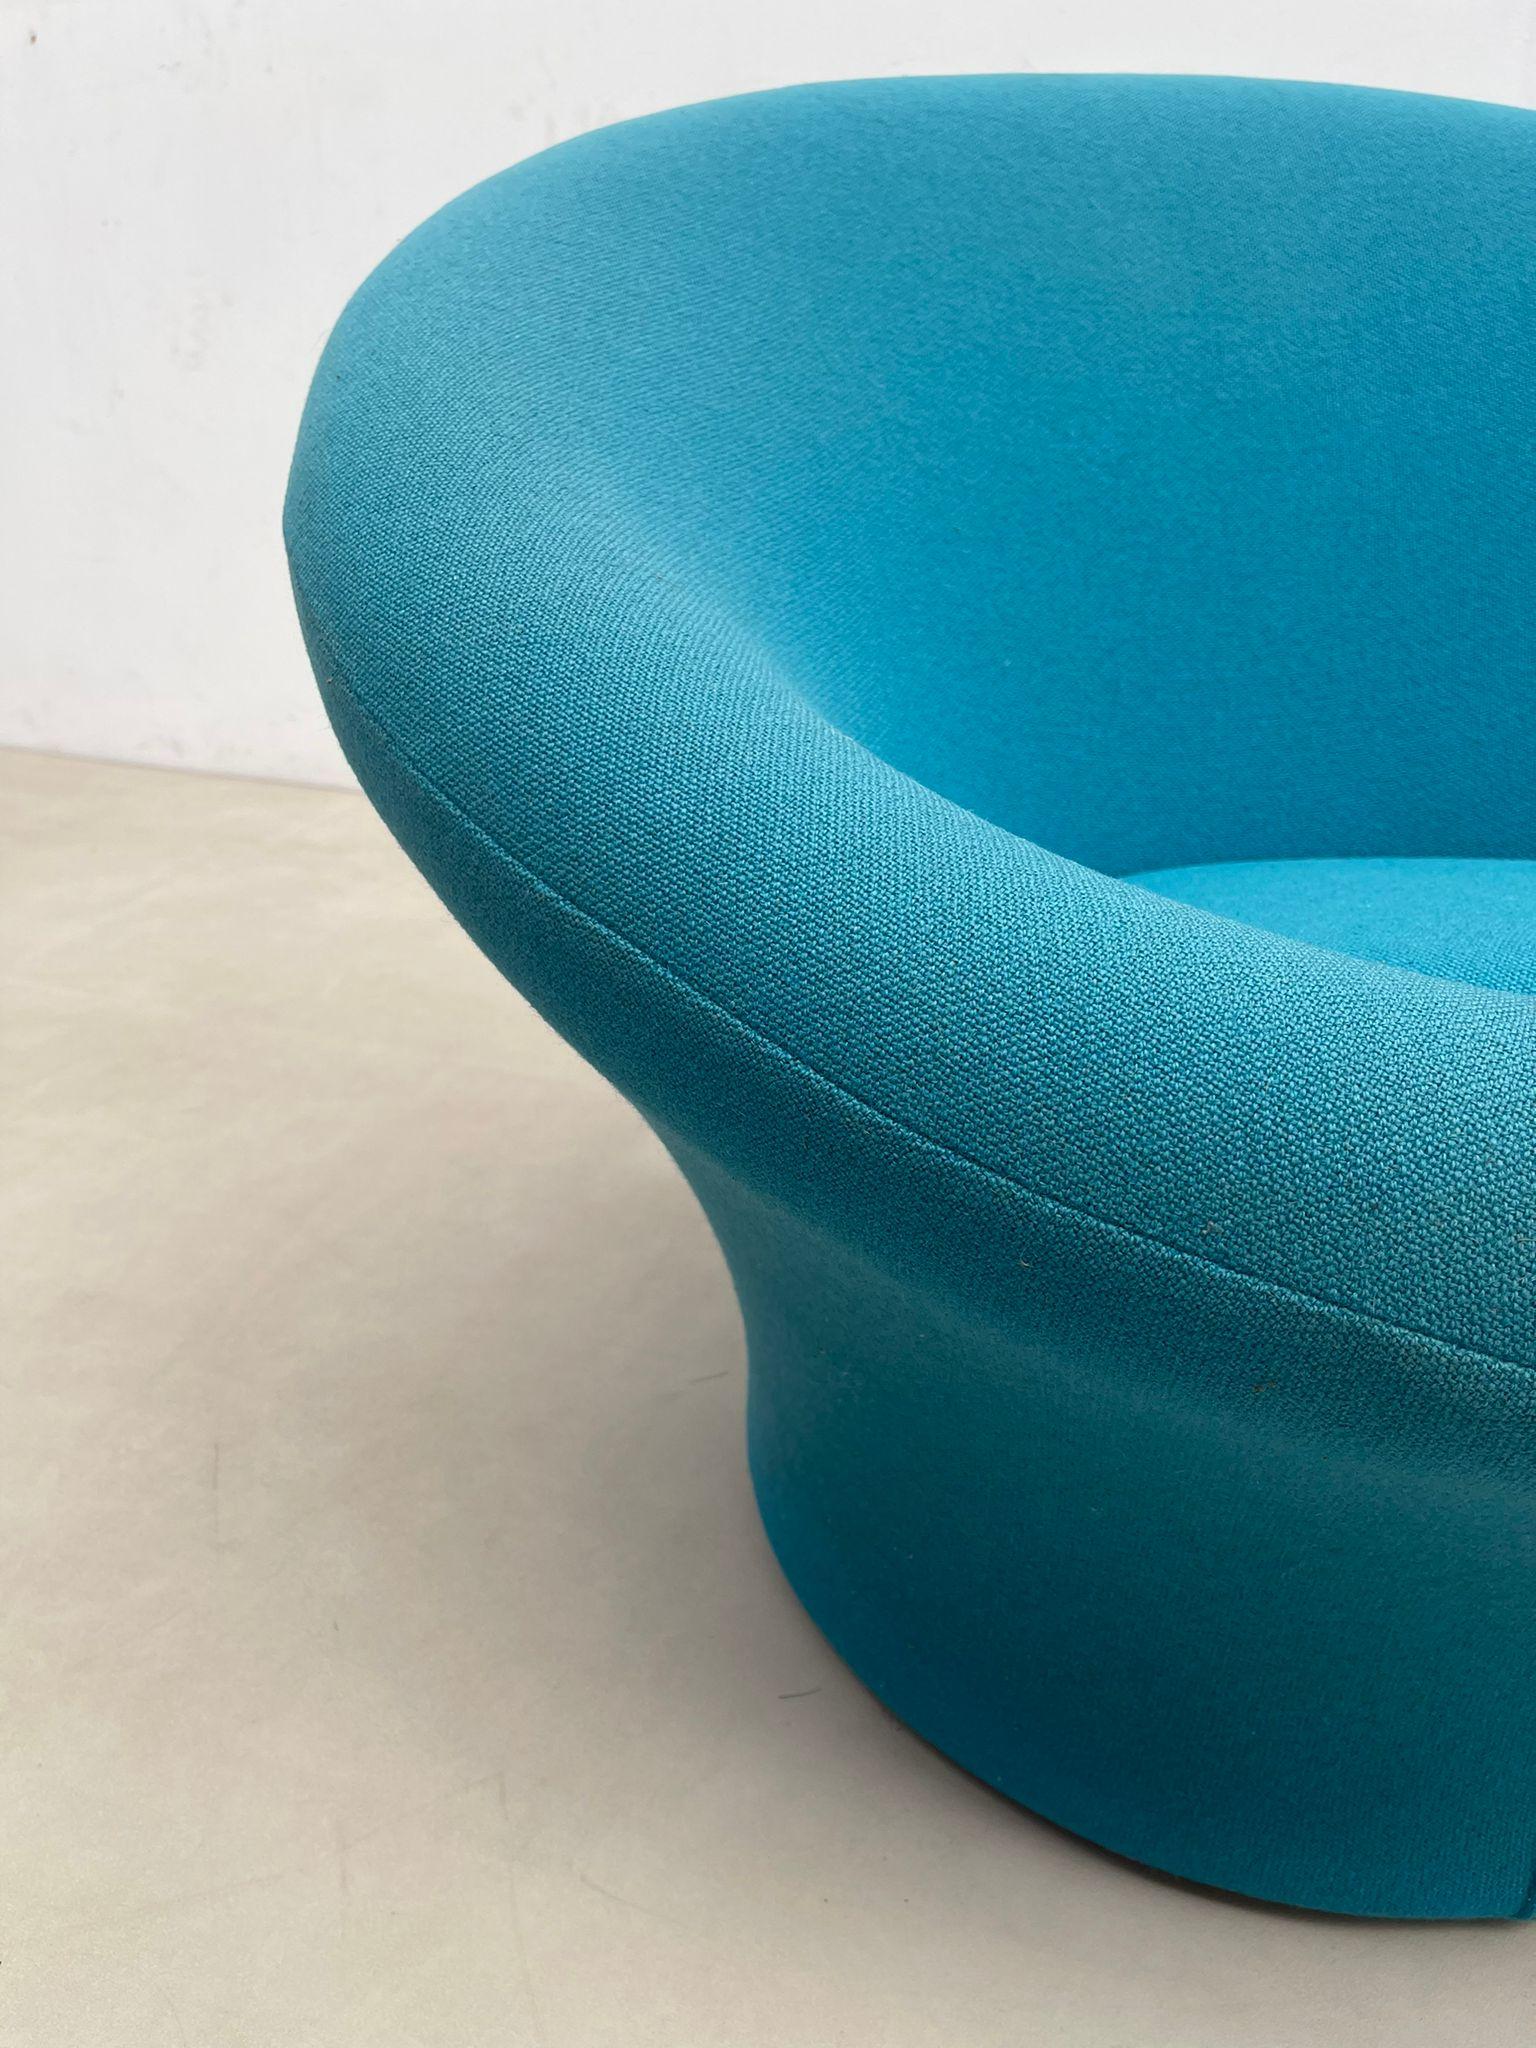 French Mid-Century Modern Blue Mushroom Chair by Pierre Paulin, Original Upholstery